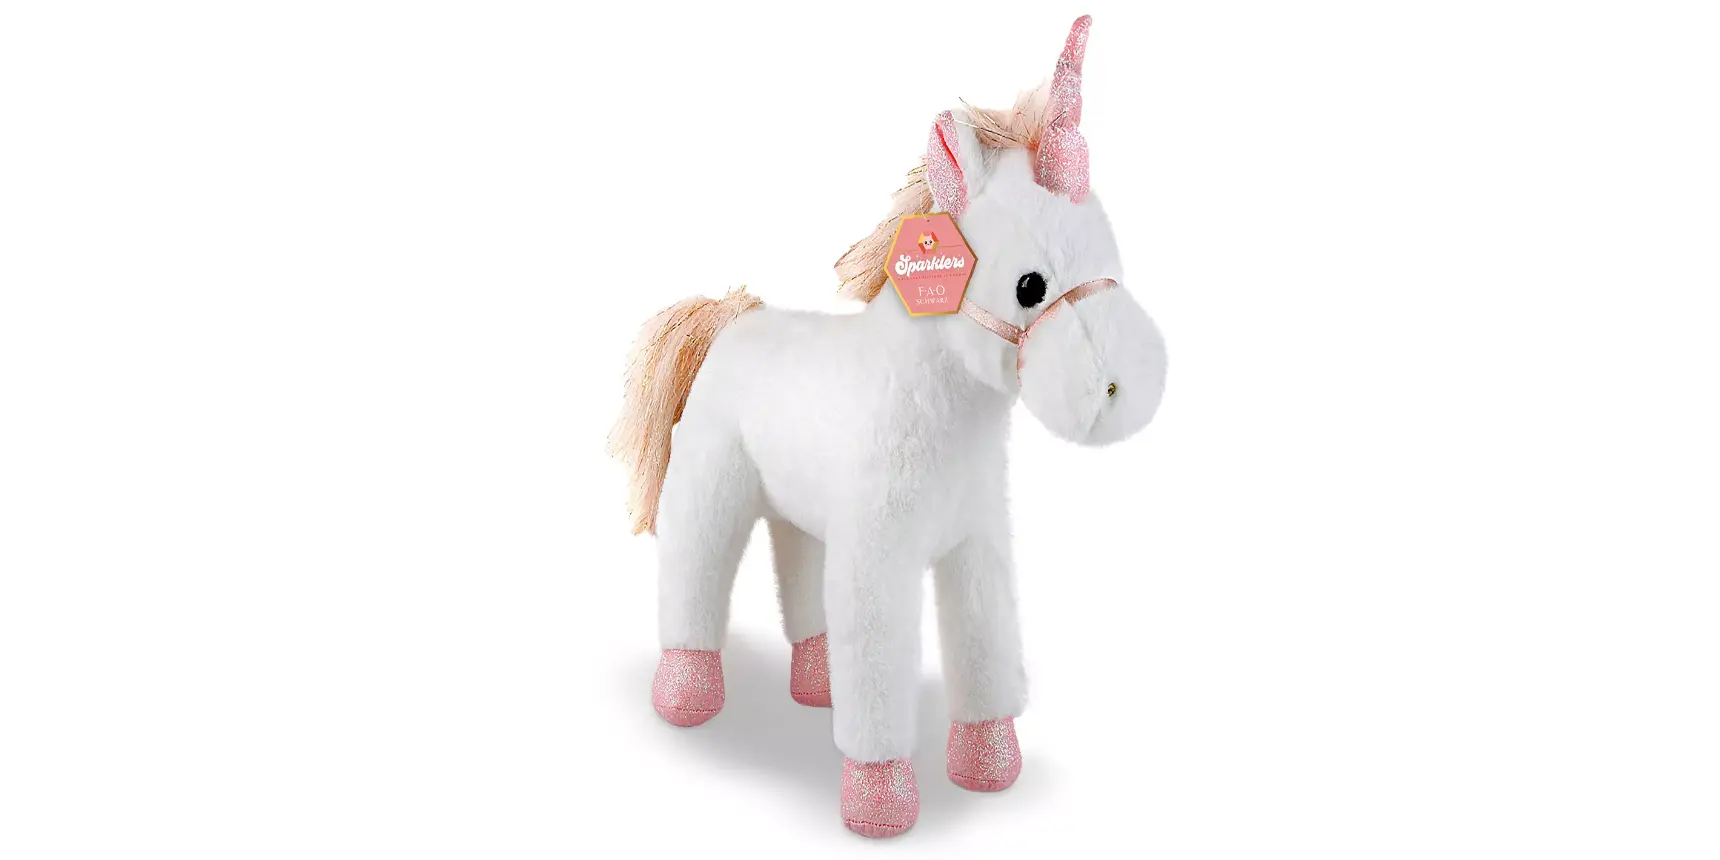 Macy - Sparklers Unicorn Plush Toy